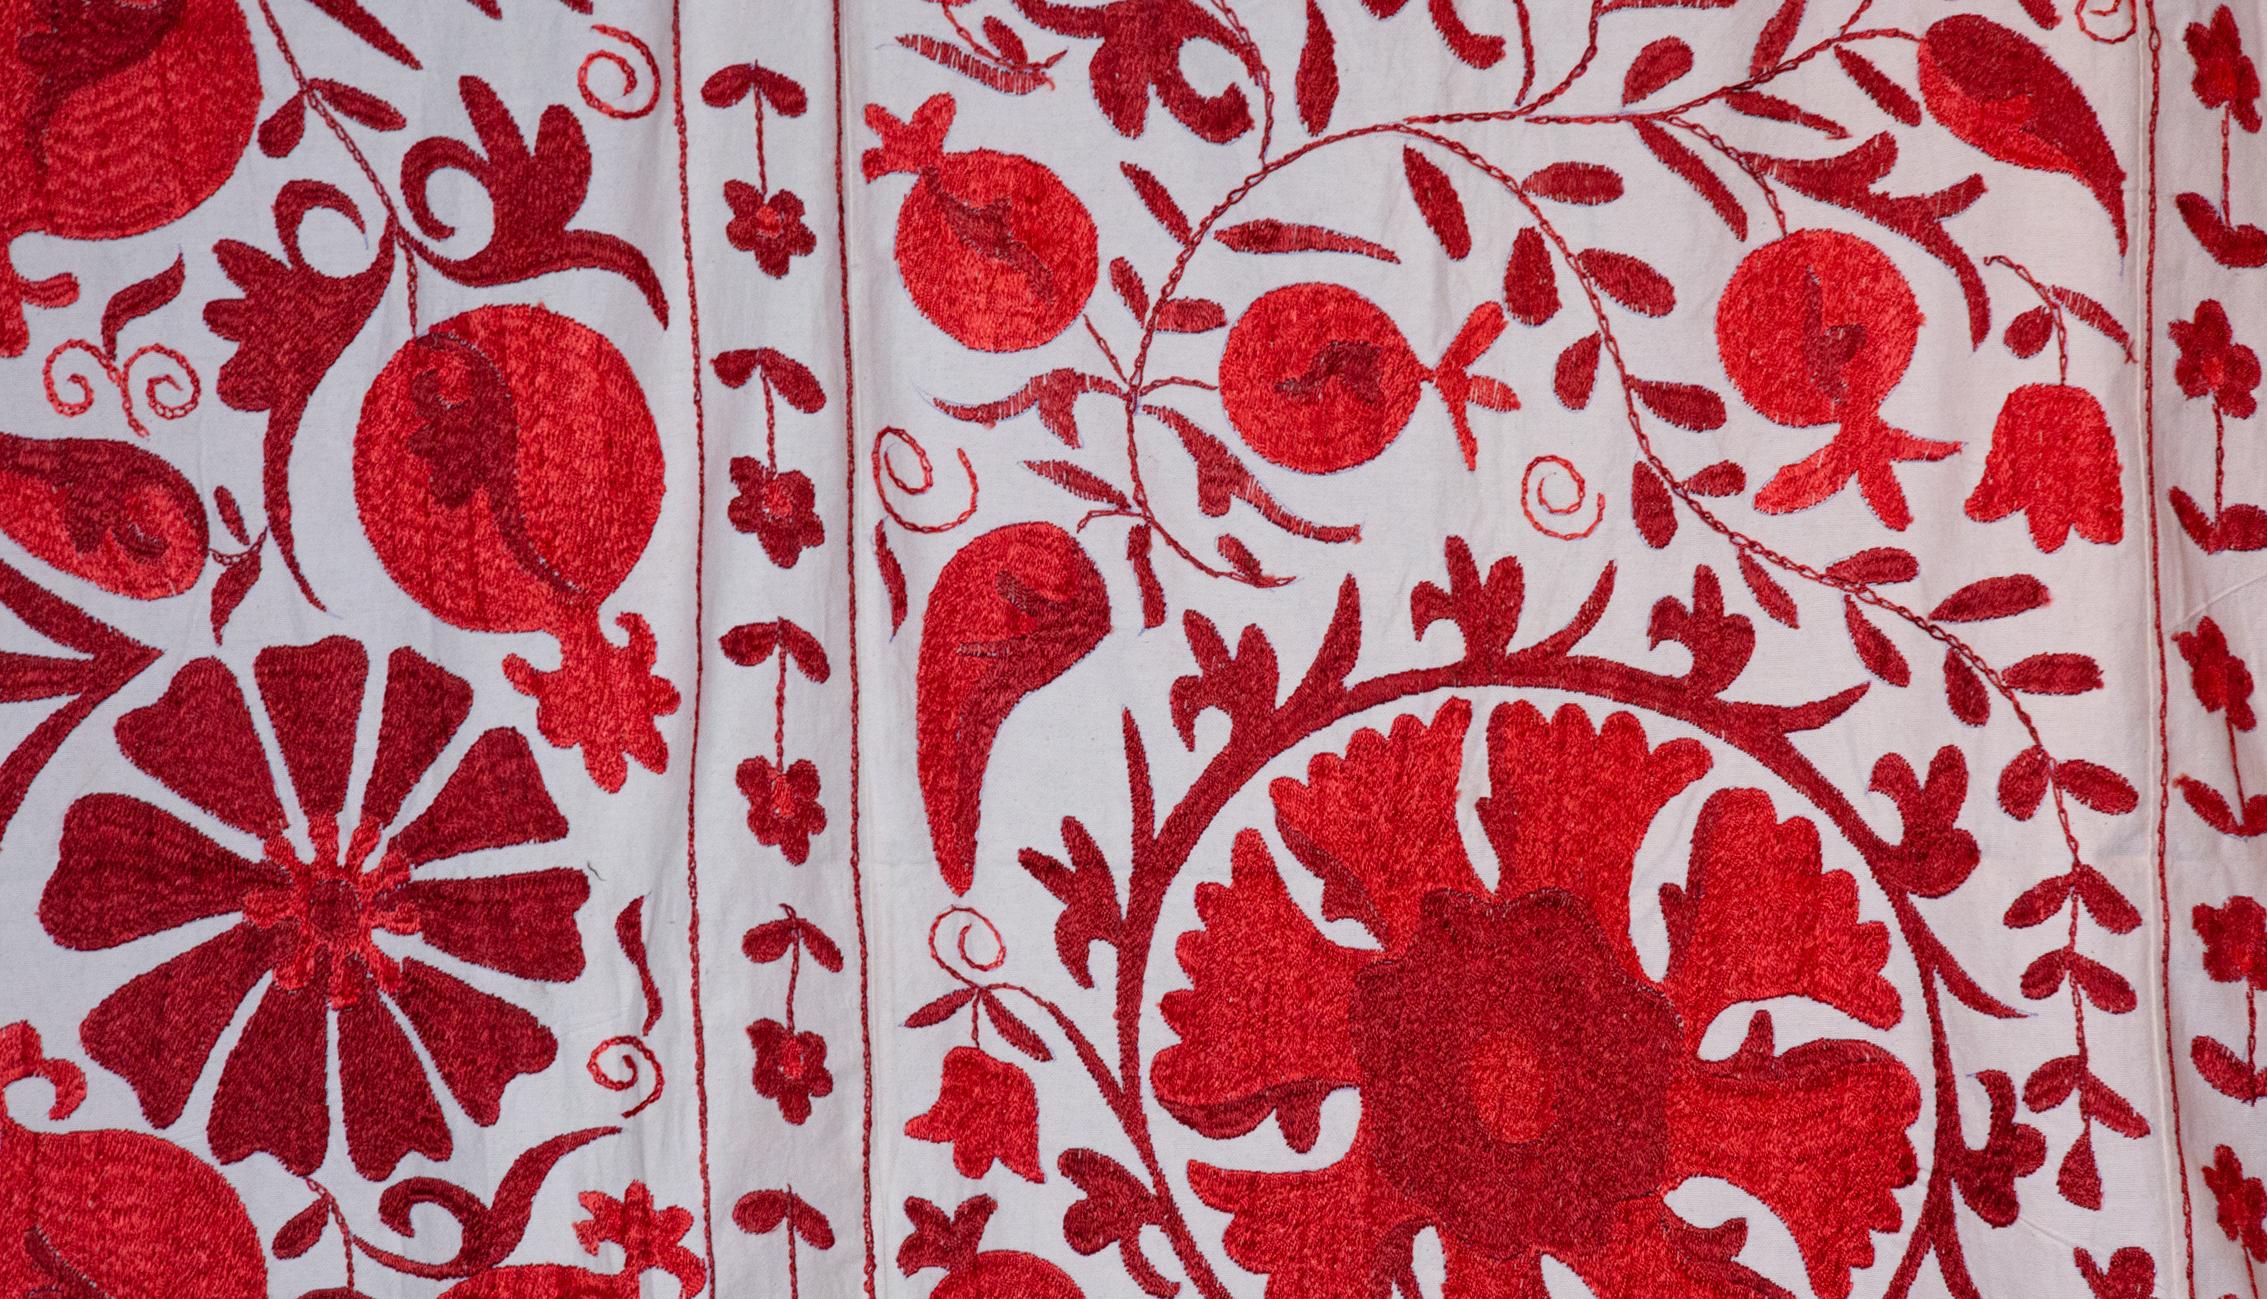 Pomegranate Suzani I. Handmade cotton Suzani with pomegranate designs. Measures: 57